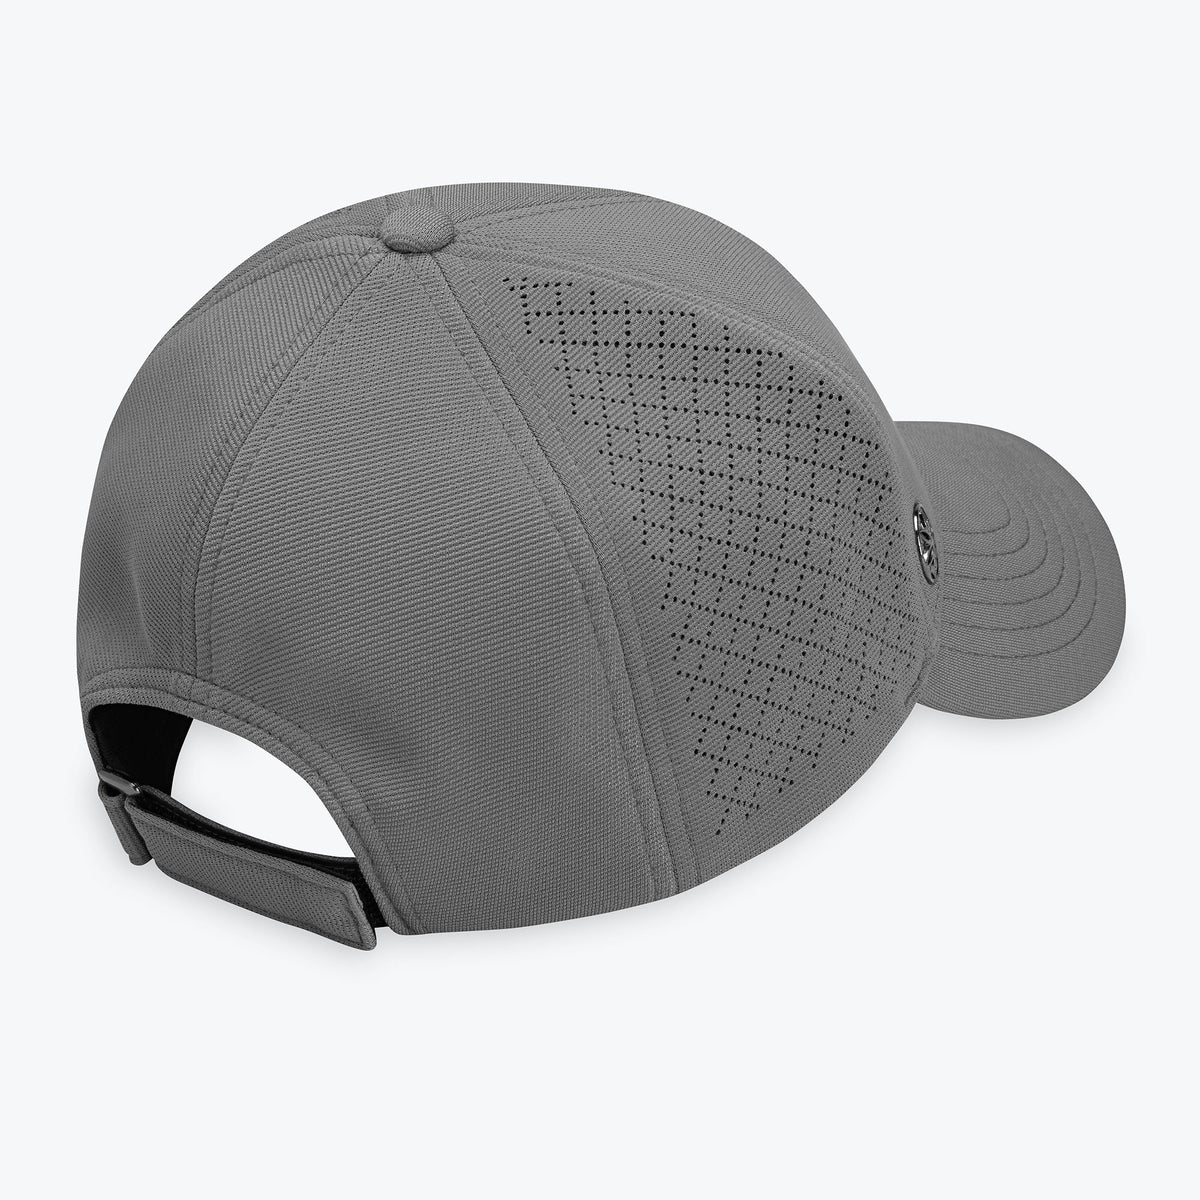 Wander Breathable Geo Hat in grey